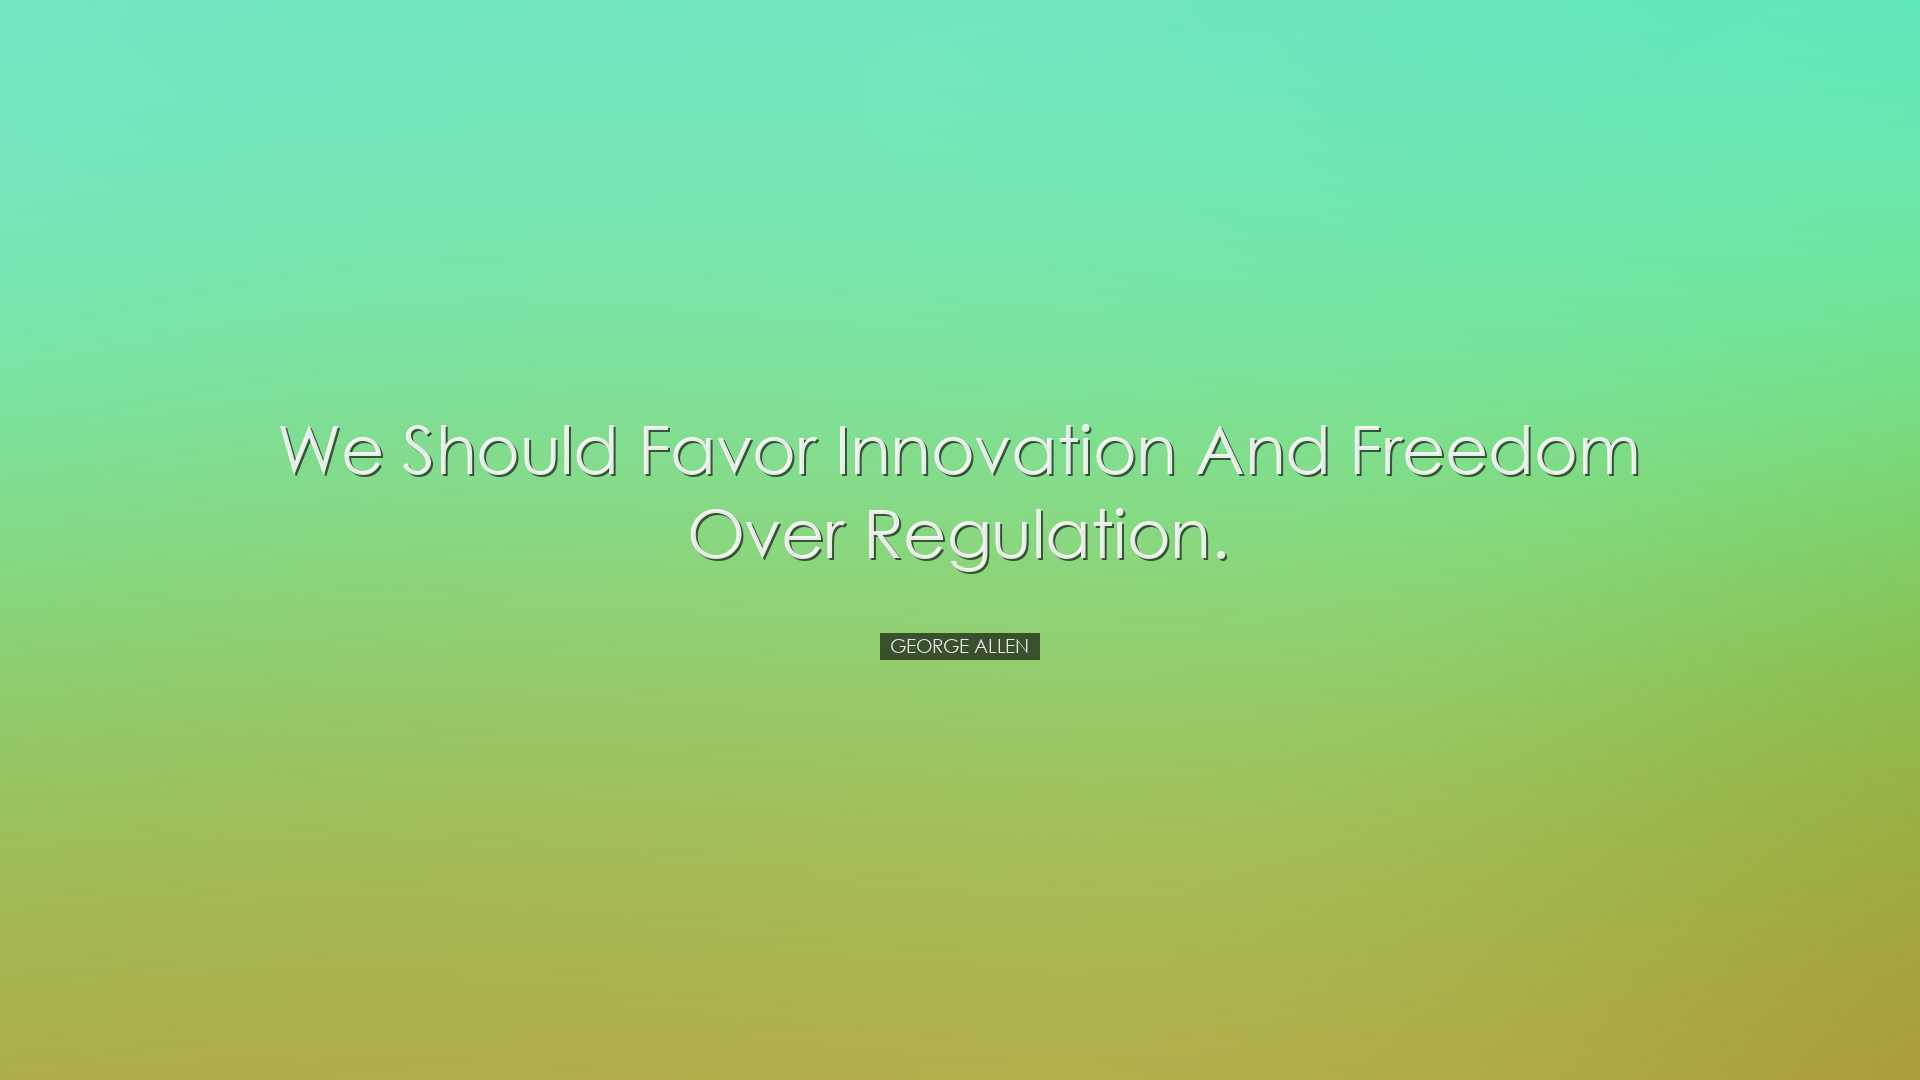 We should favor innovation and freedom over regulation. - George A